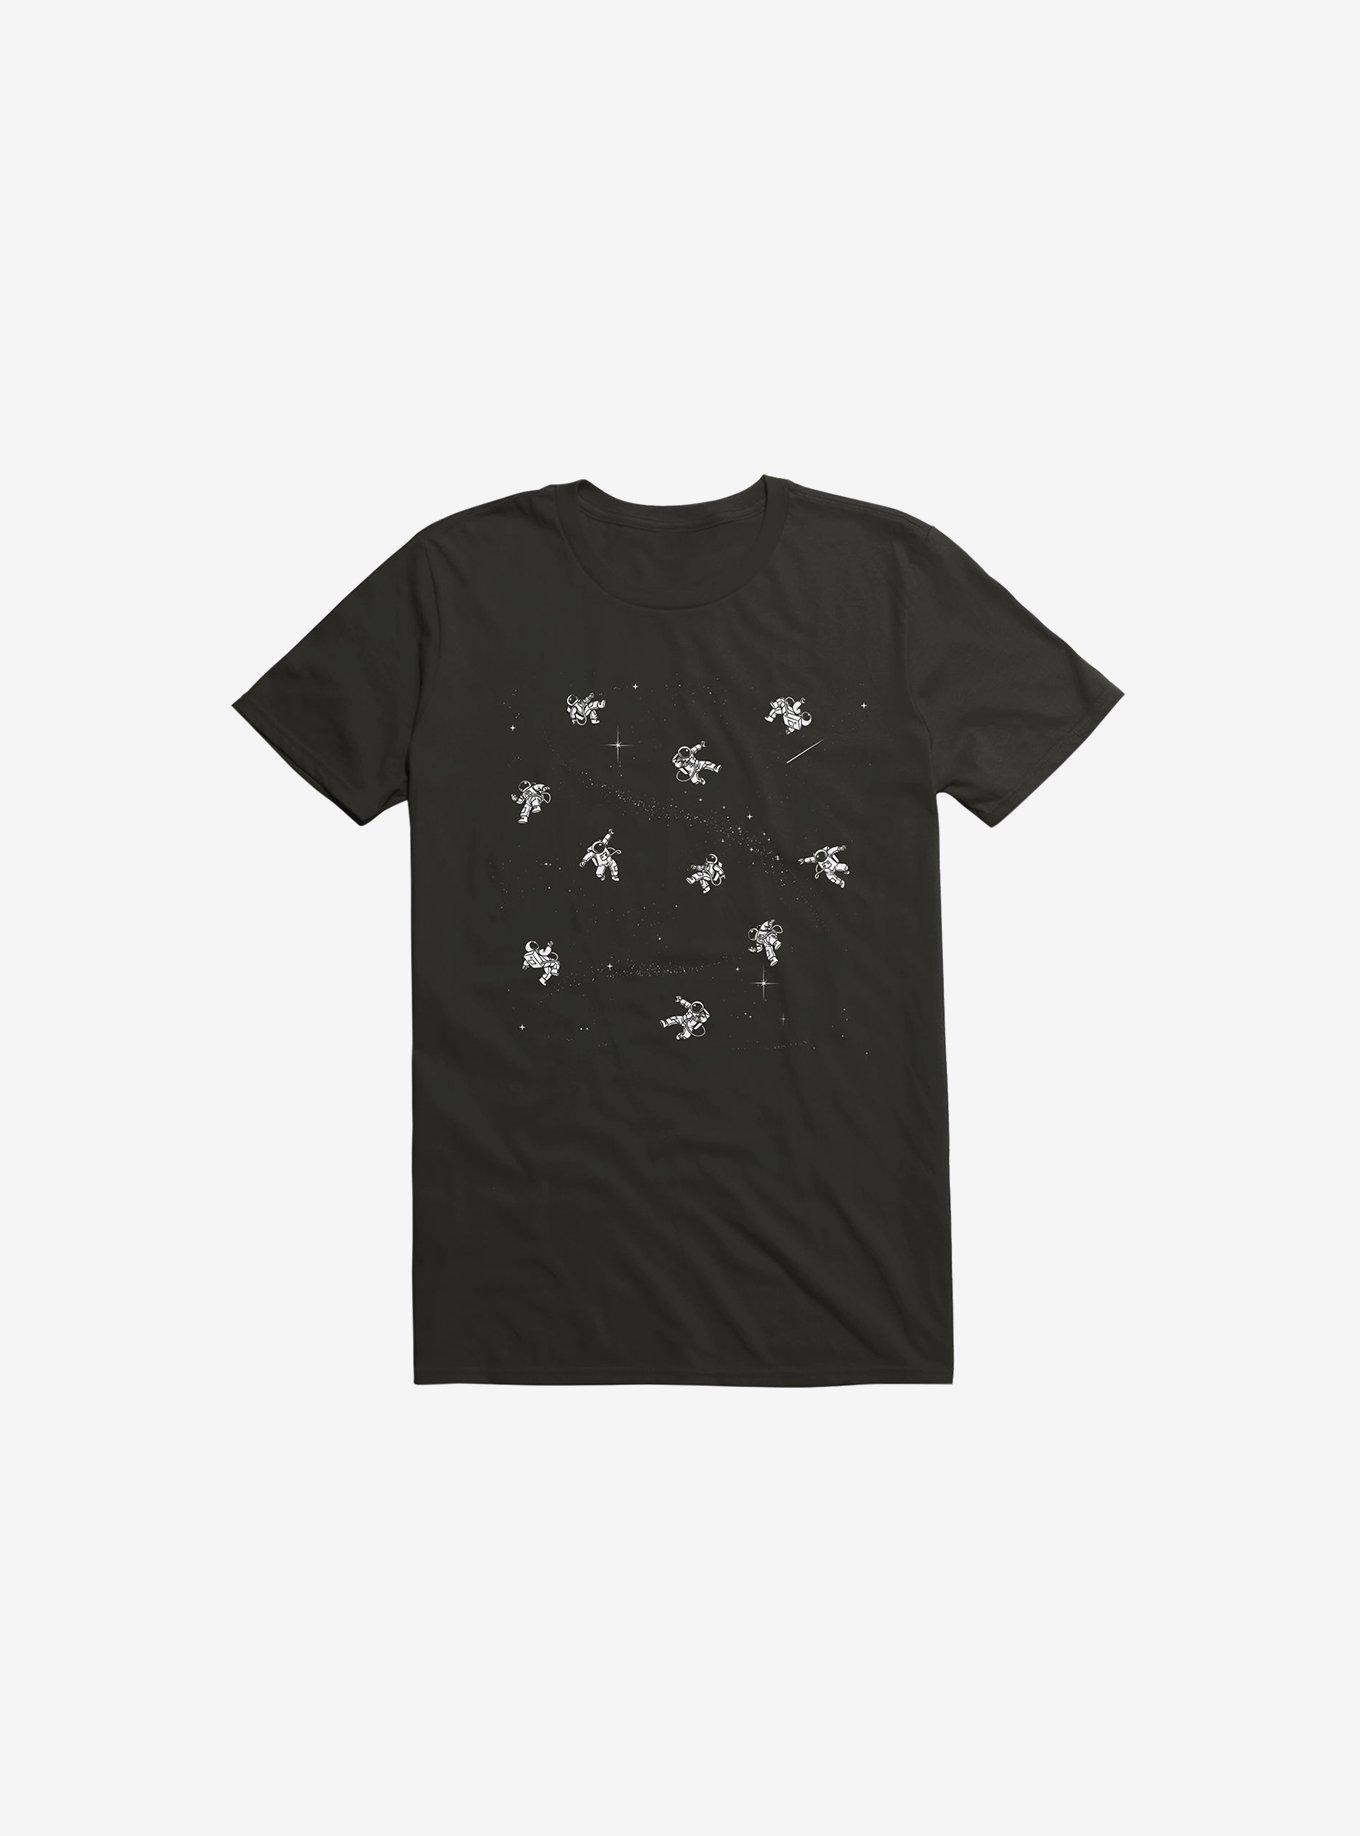 Gravity Reloaded Astronauts T-Shirt